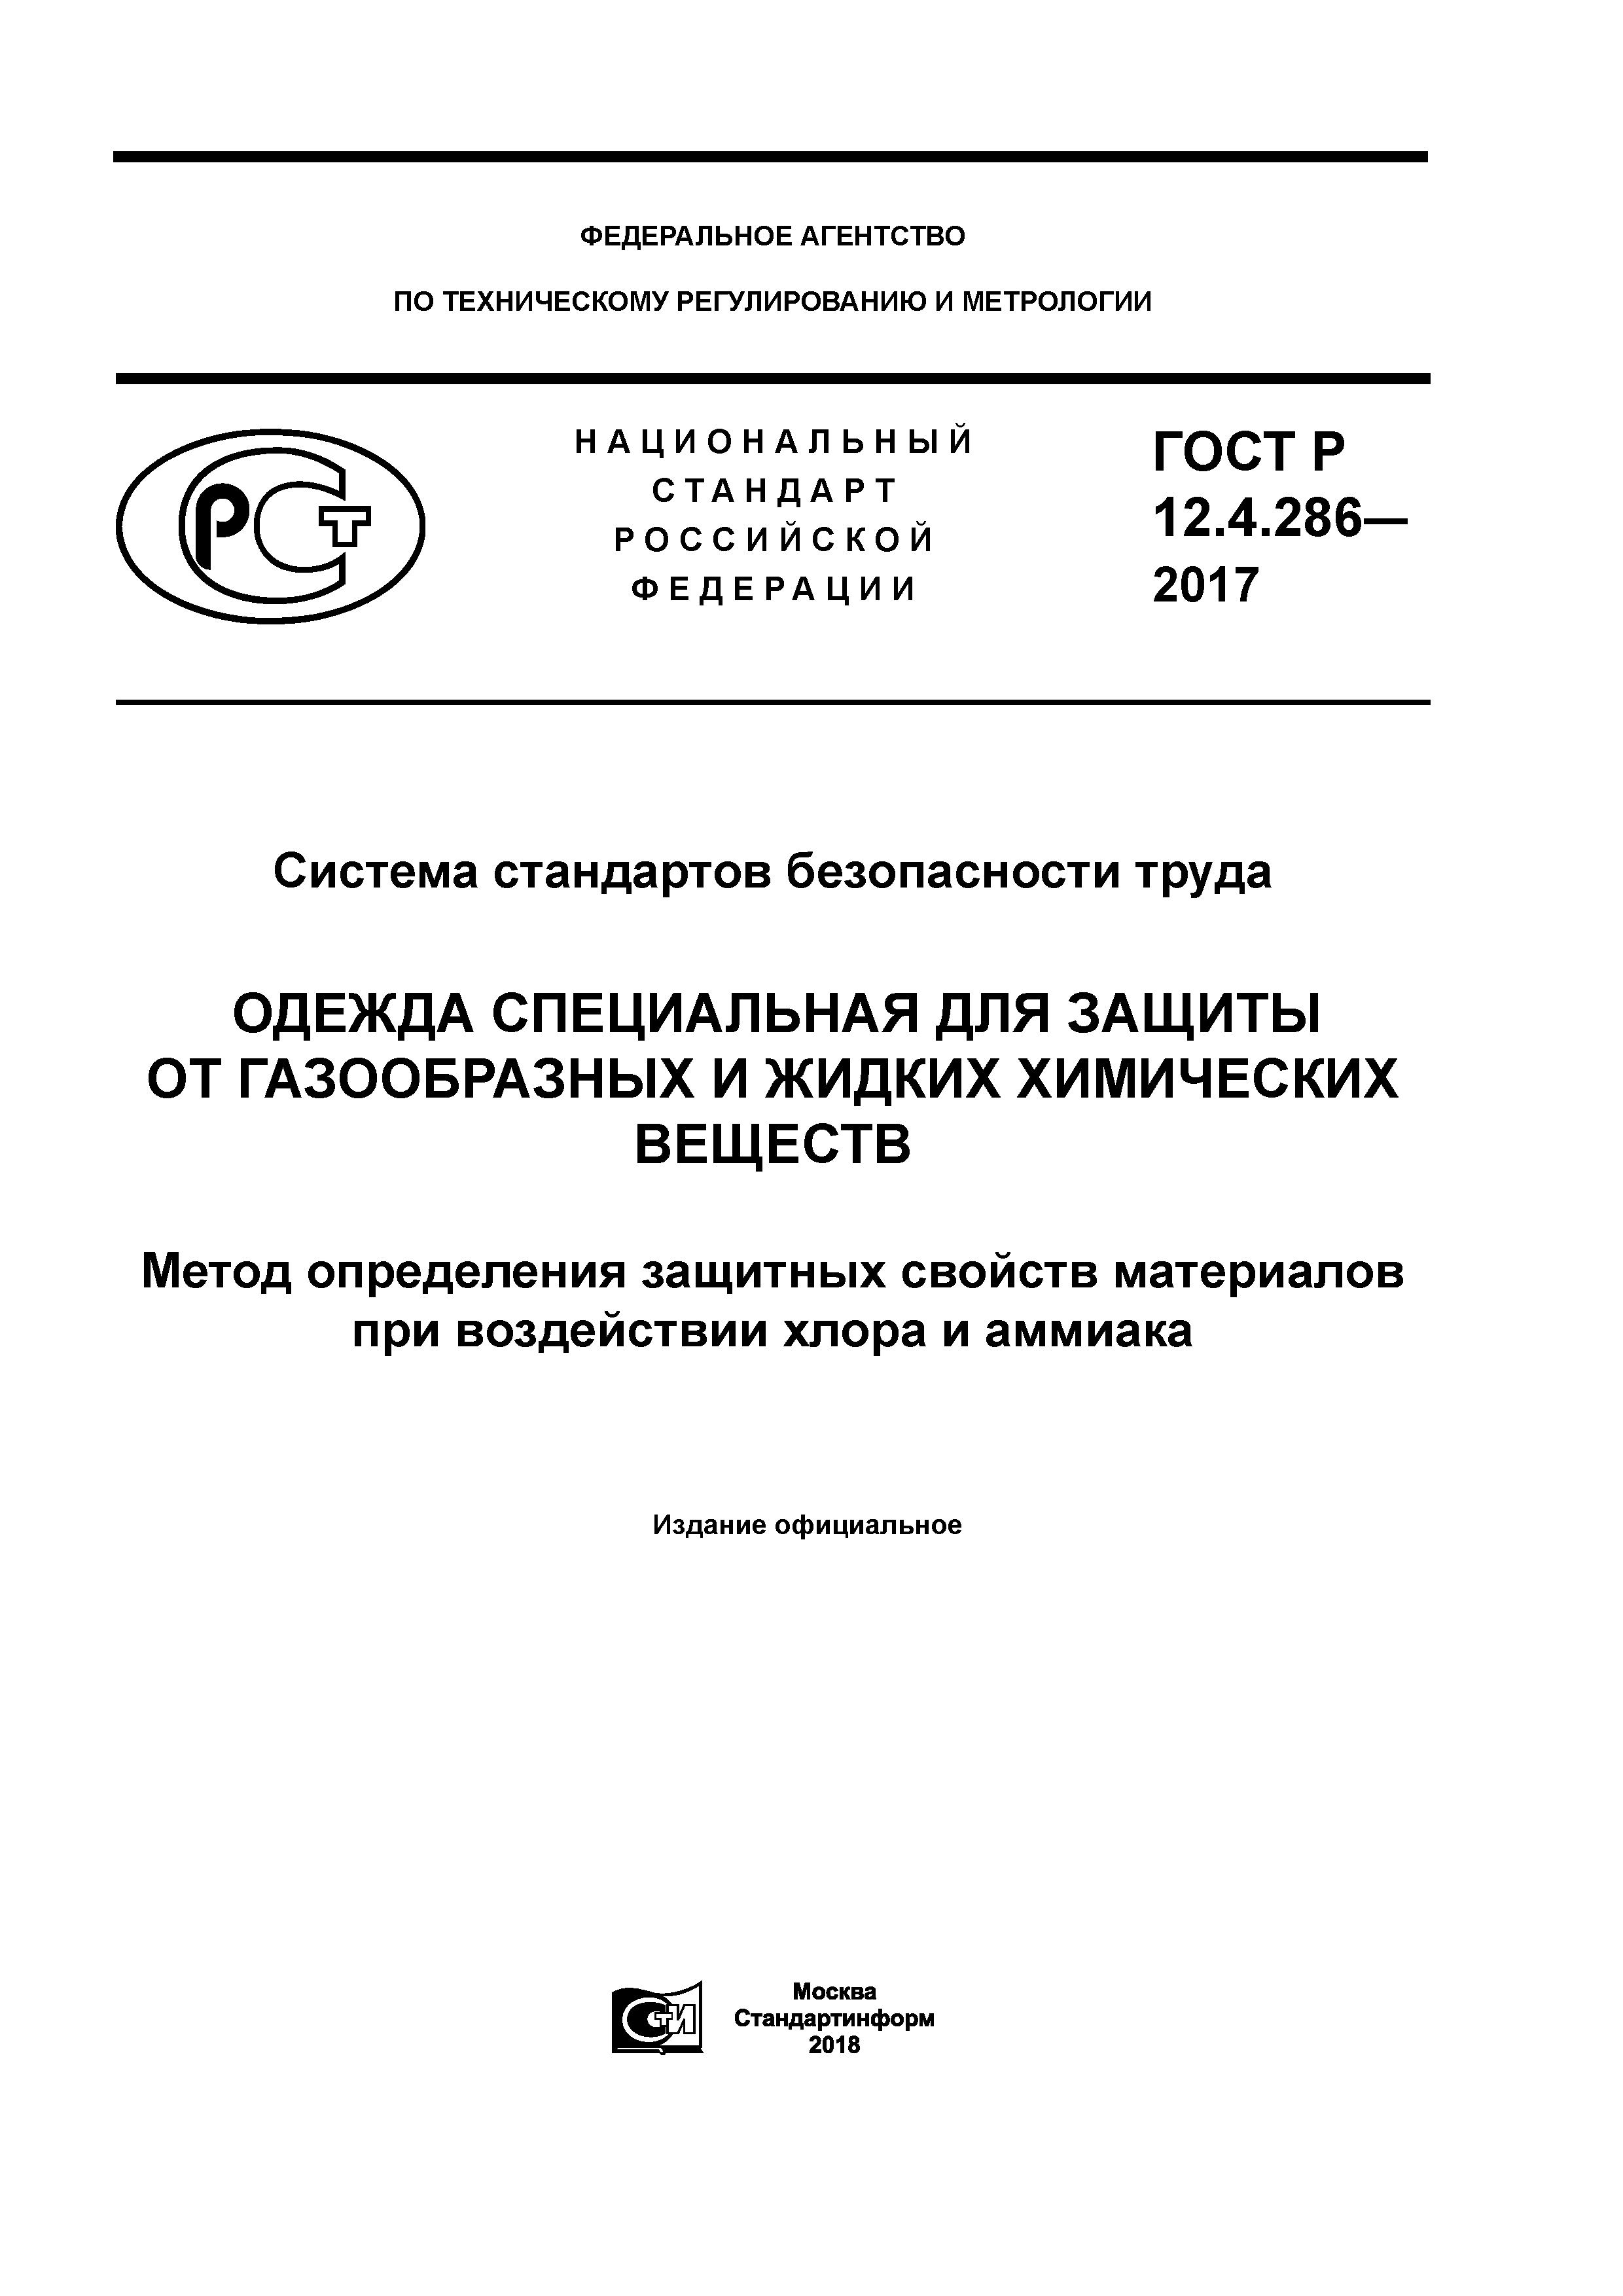 ГОСТ Р 12.4.286-2017